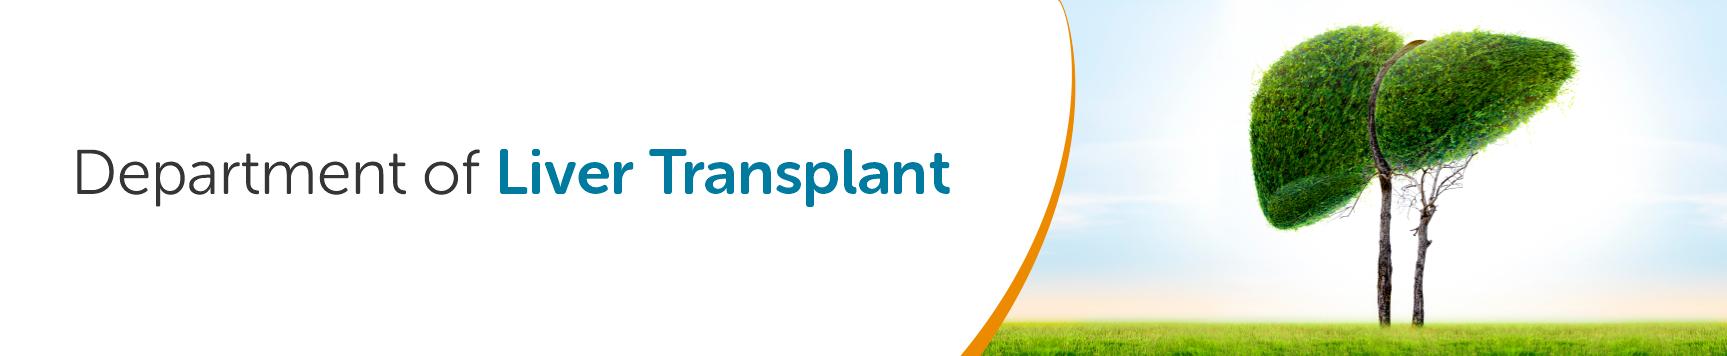 Liver Transplant - Web Banner - W 1728 x H 356 - 170224